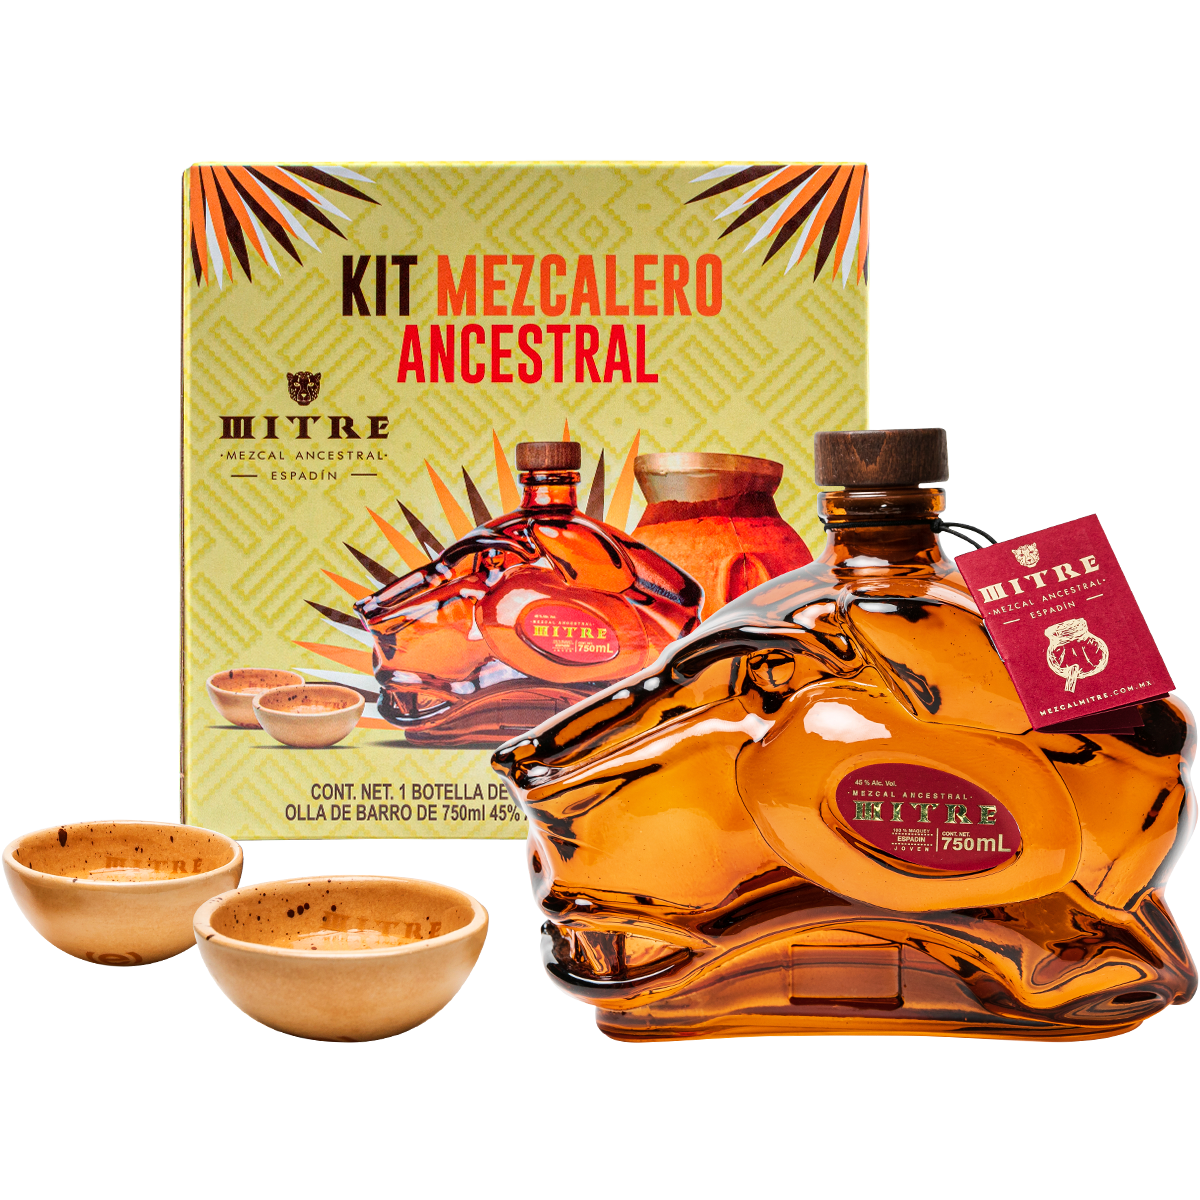 Ancestral Mezcalero Kit | Mezcal Mitre Ancestral + 2 Ceramic Glasses